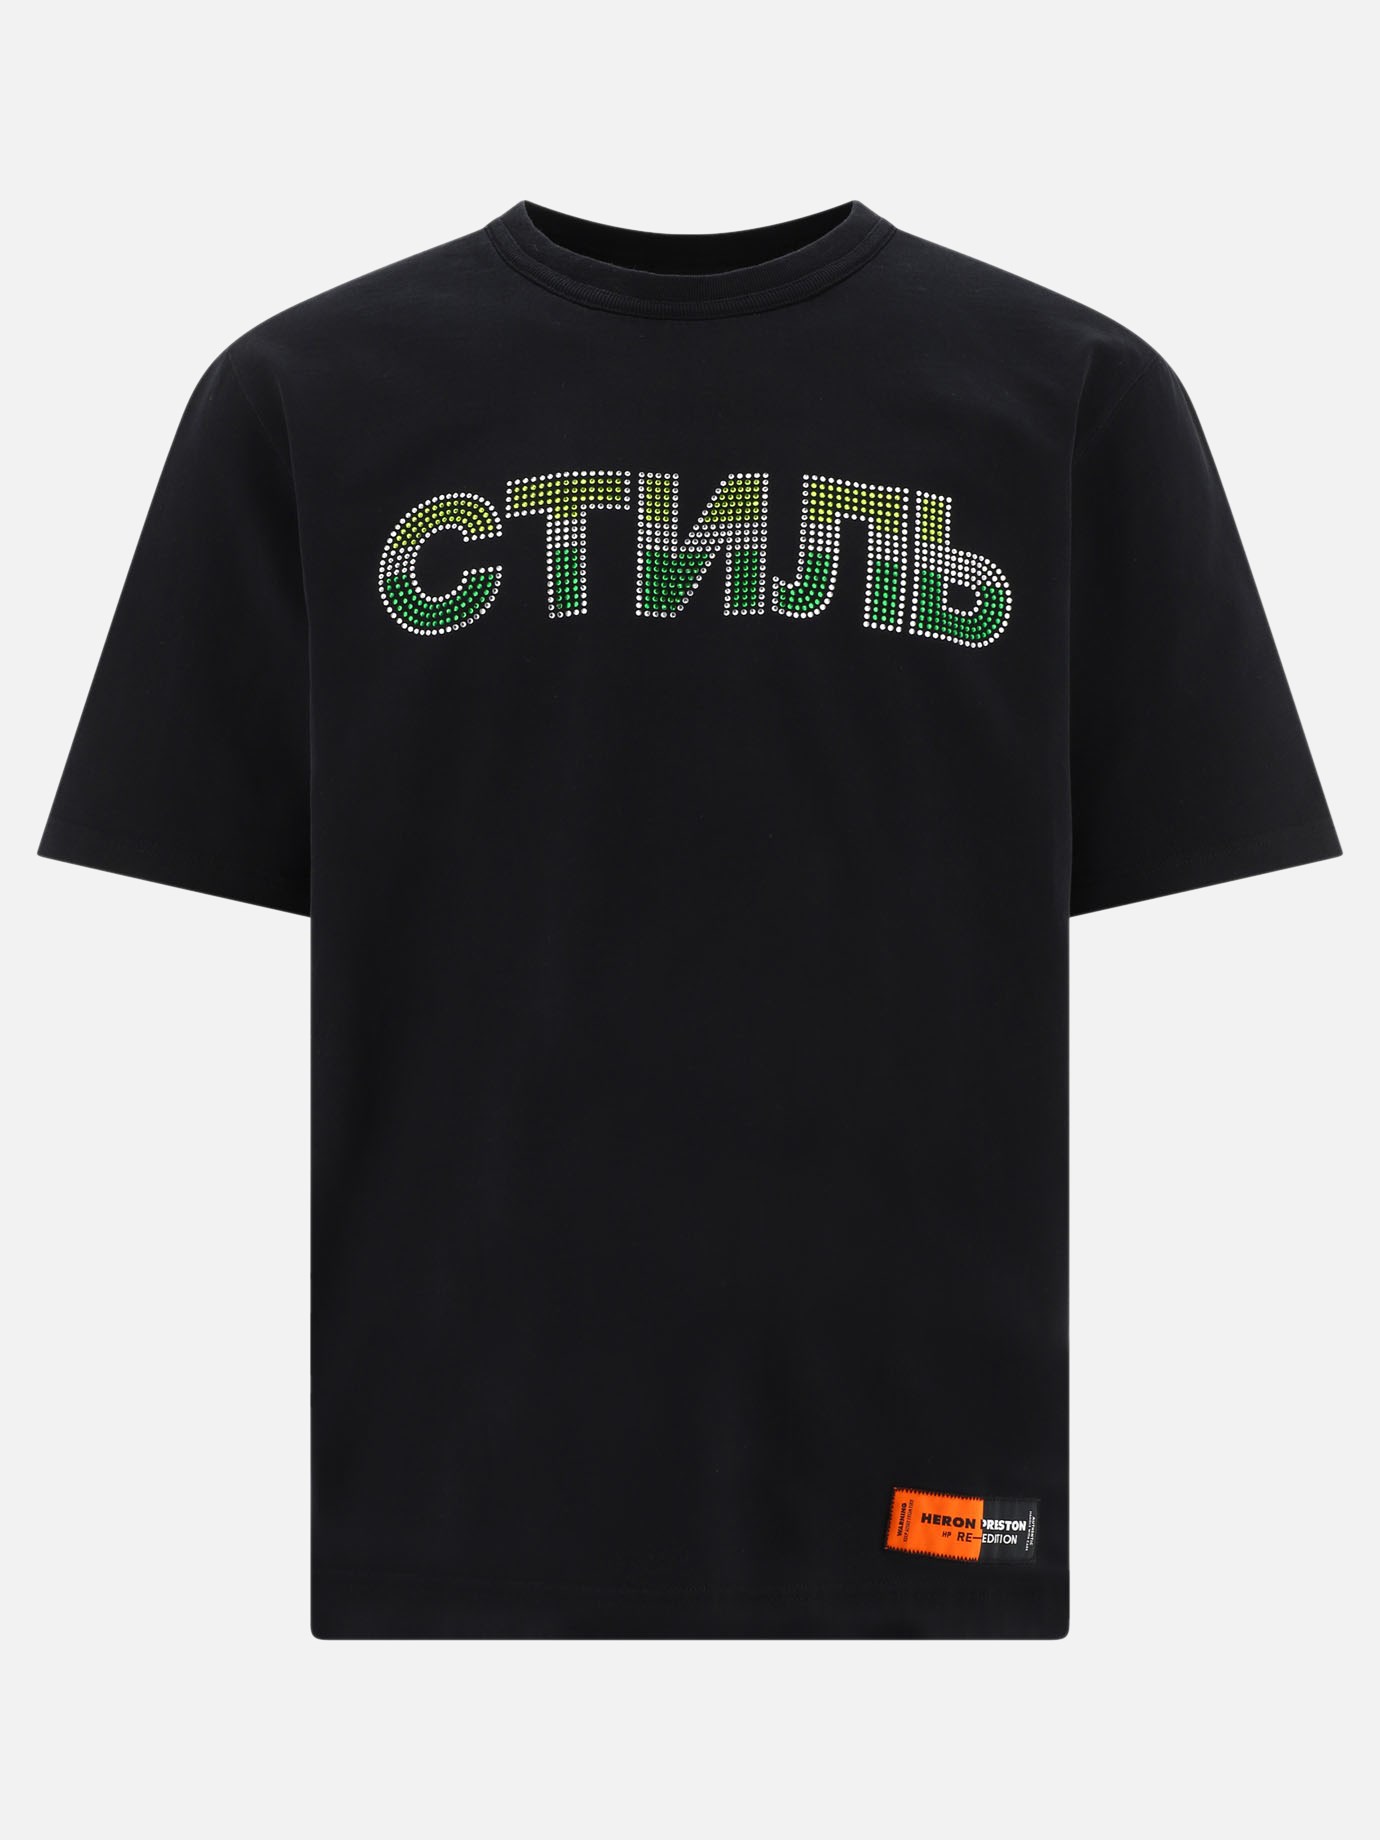  CTNMB Strass  t-shirtby Heron Preston - 5